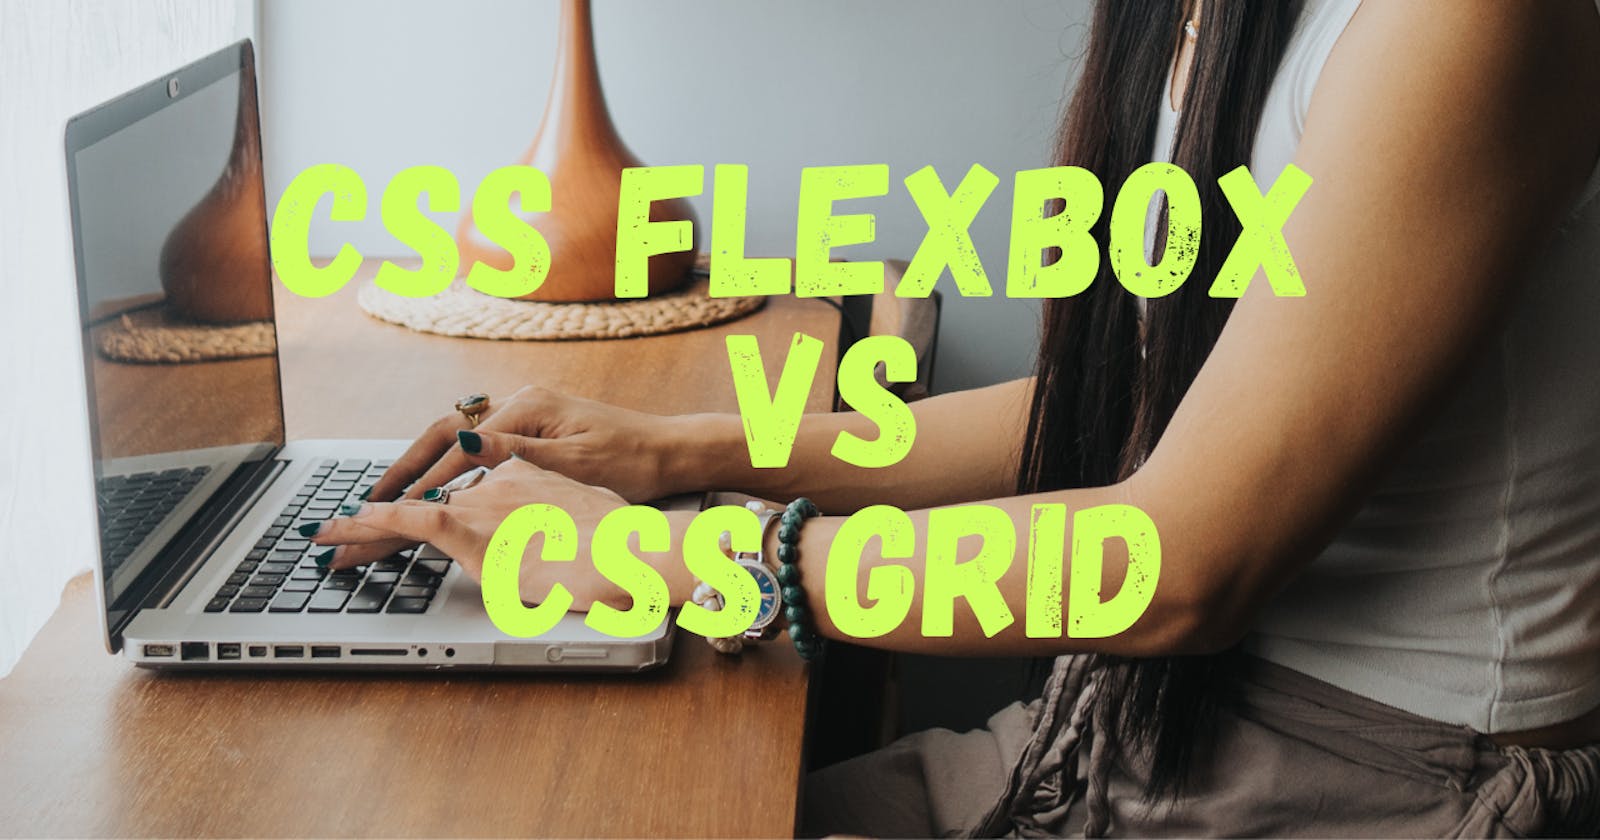 The Epic Battle: CSS Flexbox vs Grid - Who Will Reign Supreme?